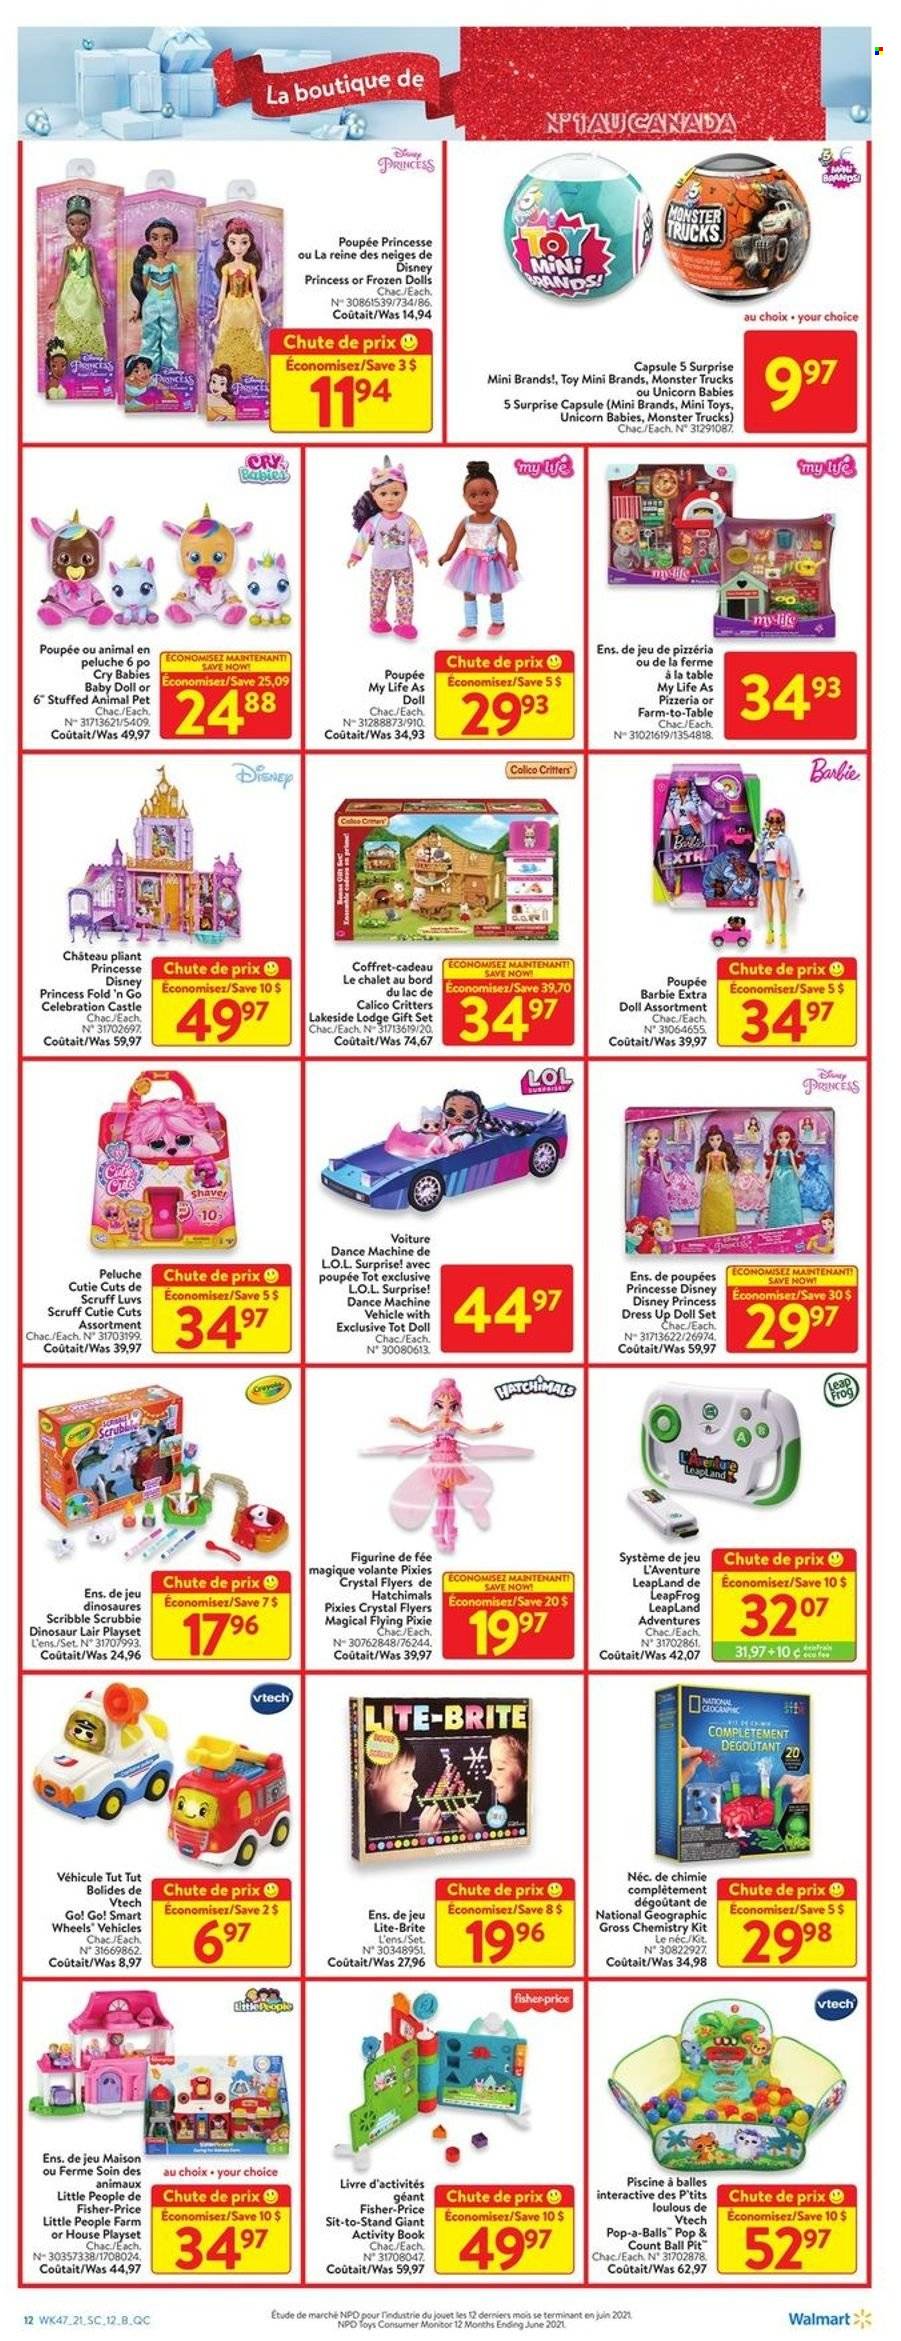 thumbnail - Walmart Flyer - December 16, 2021 - December 24, 2021 - Sales products - Disney, gift set, Celebration, Castle, Brite, shaver, Barbie, book, table, Little People, dress, doll, LeapFrog, Lite-Brite, Vtech, play set, toys, vehicle, Fisher-Price, dinosaur, princess, Monster Trucks, Go!, monitor, Hatchimals. Page 16.